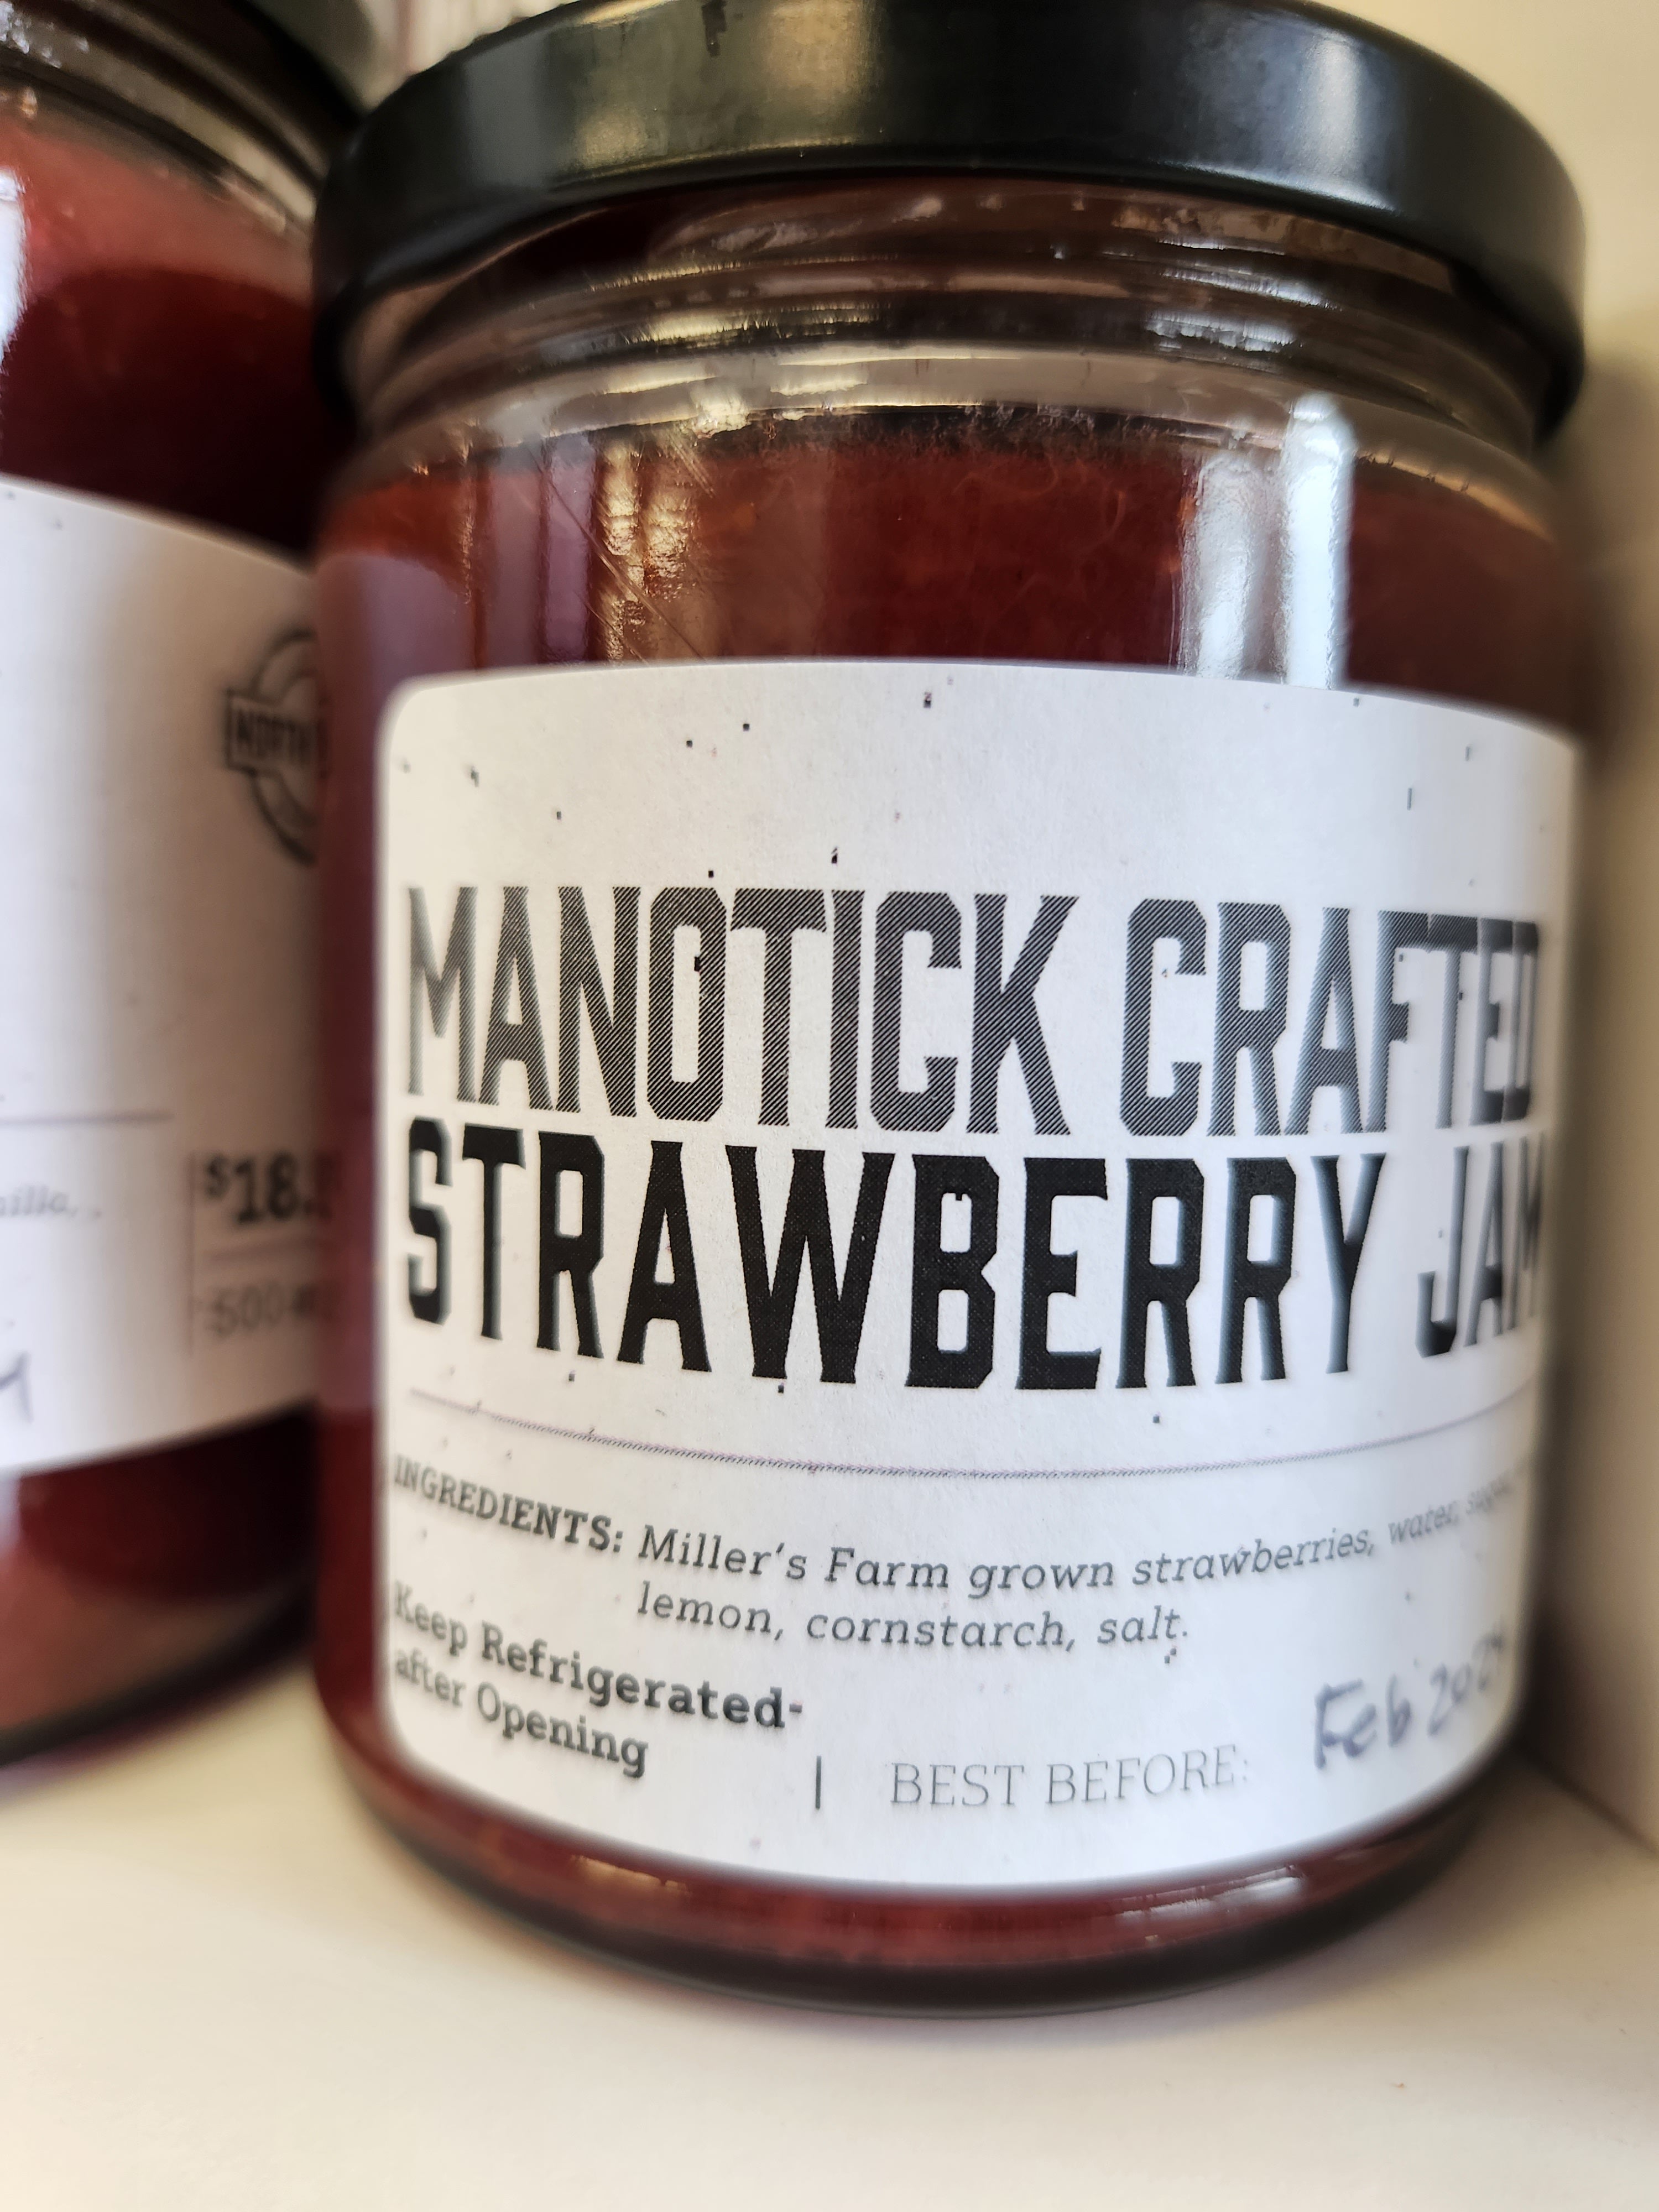 Manotick Crafted Strawberry Jam (250 ml)